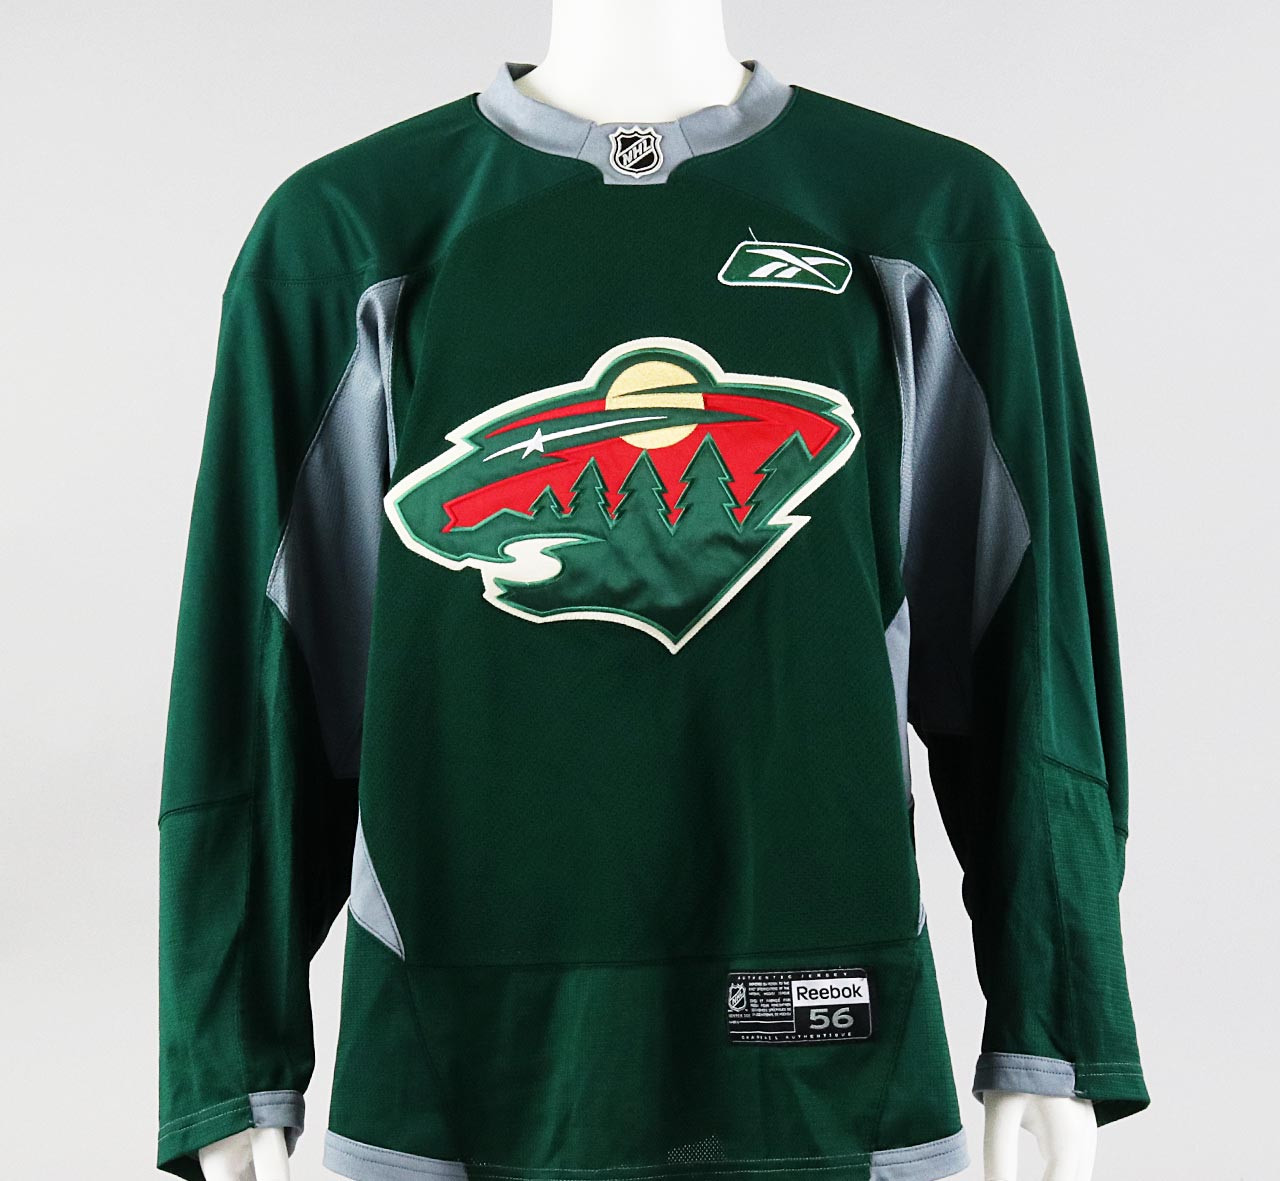 Practice Jersey - Minnesota Wild - Green Reebok Size 56 #8 - Pro Stock  Hockey